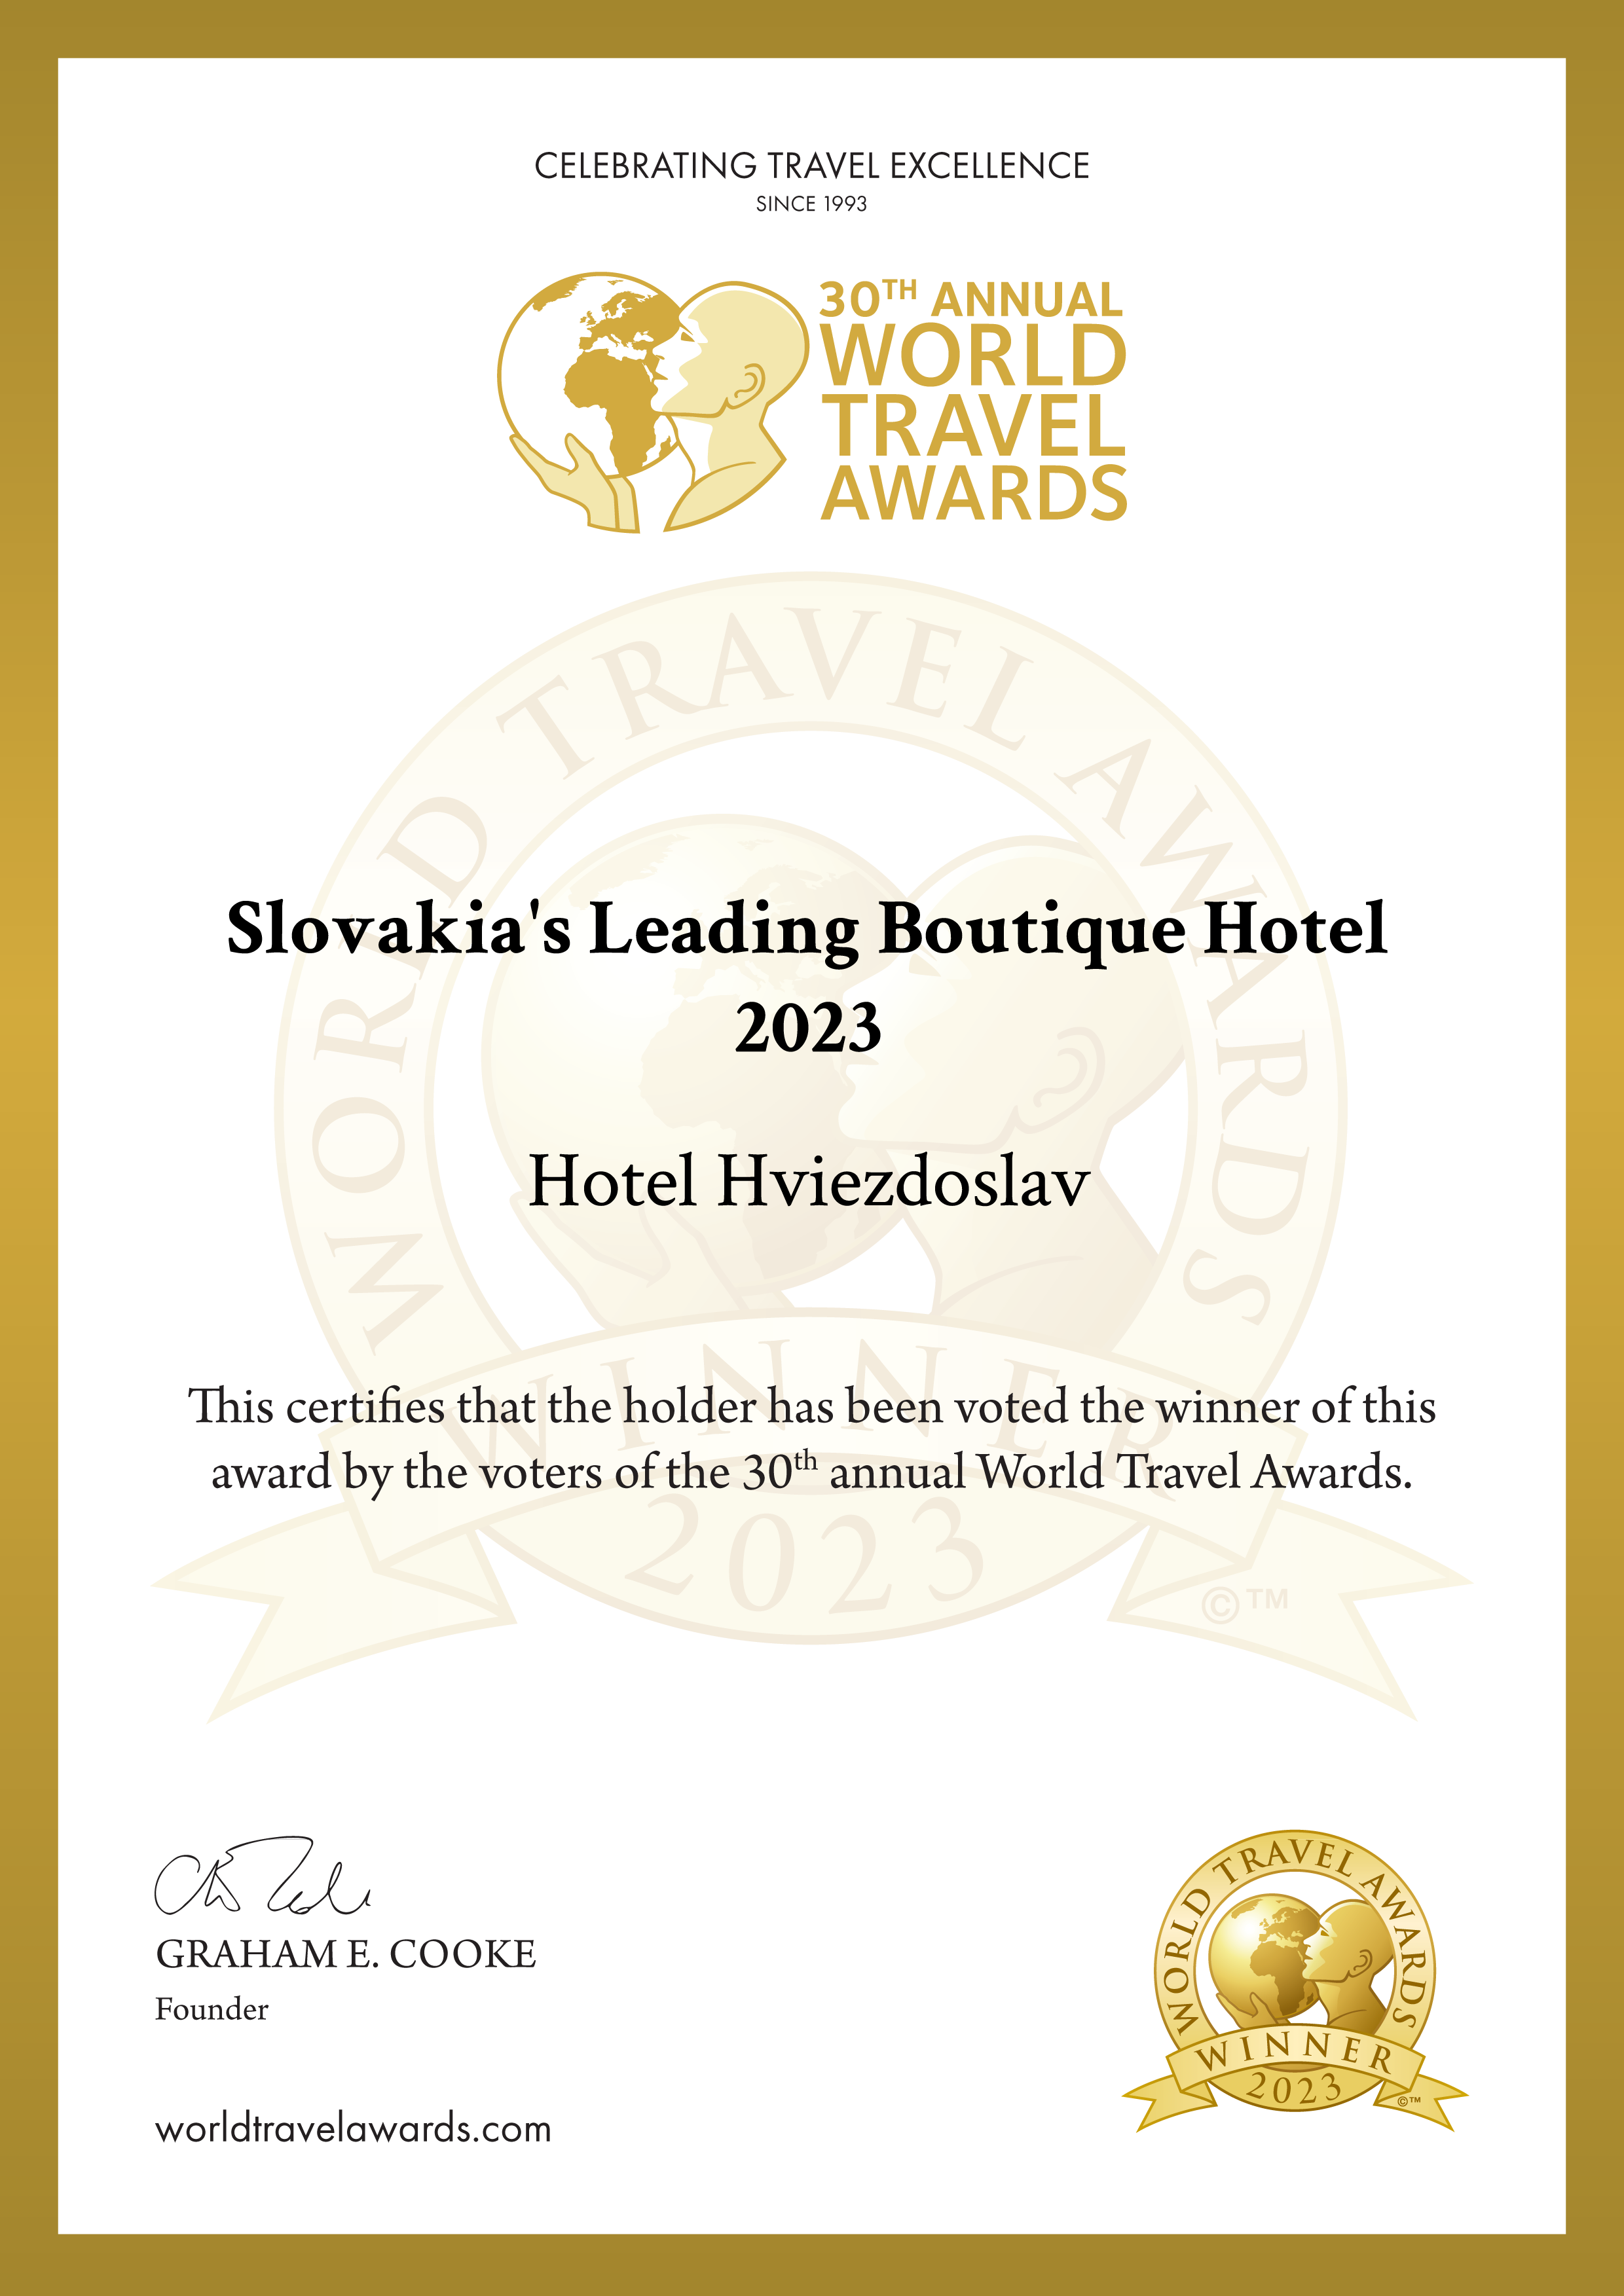 Slovakias leading boutique hotel award